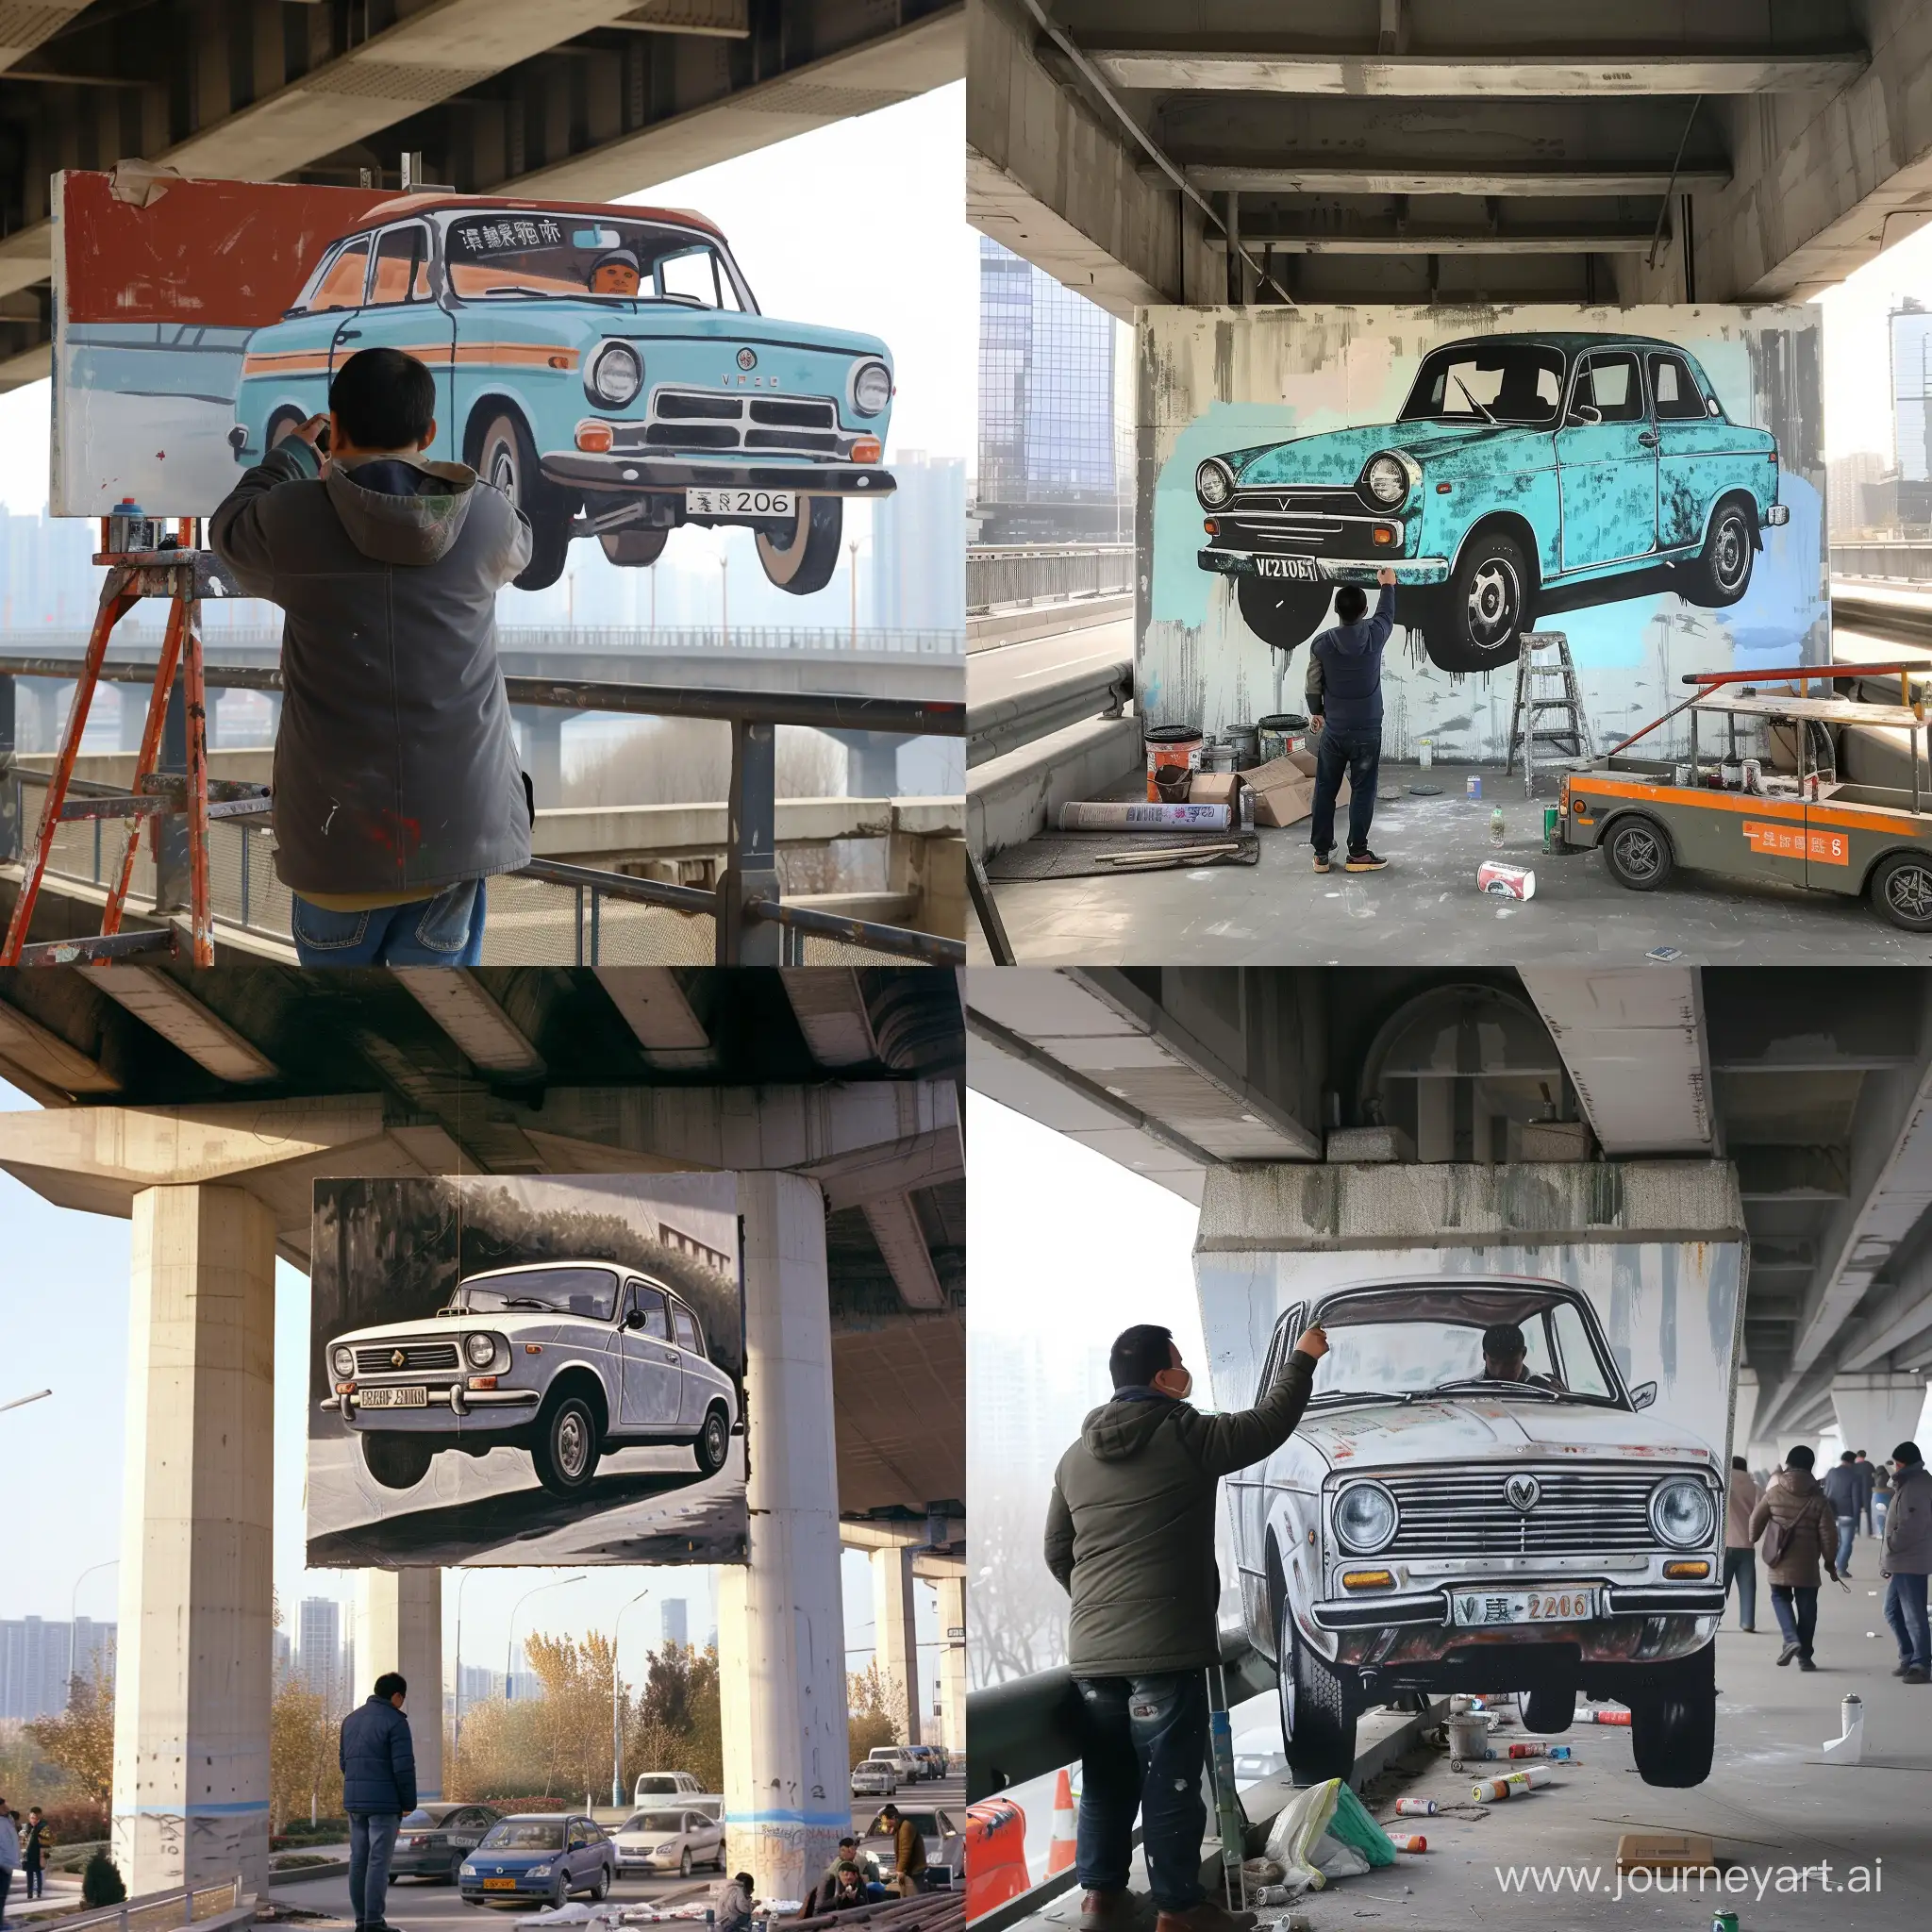 Auto-Painter-Creating-VAZ-2106-Artwork-on-Beijing-Viaduct